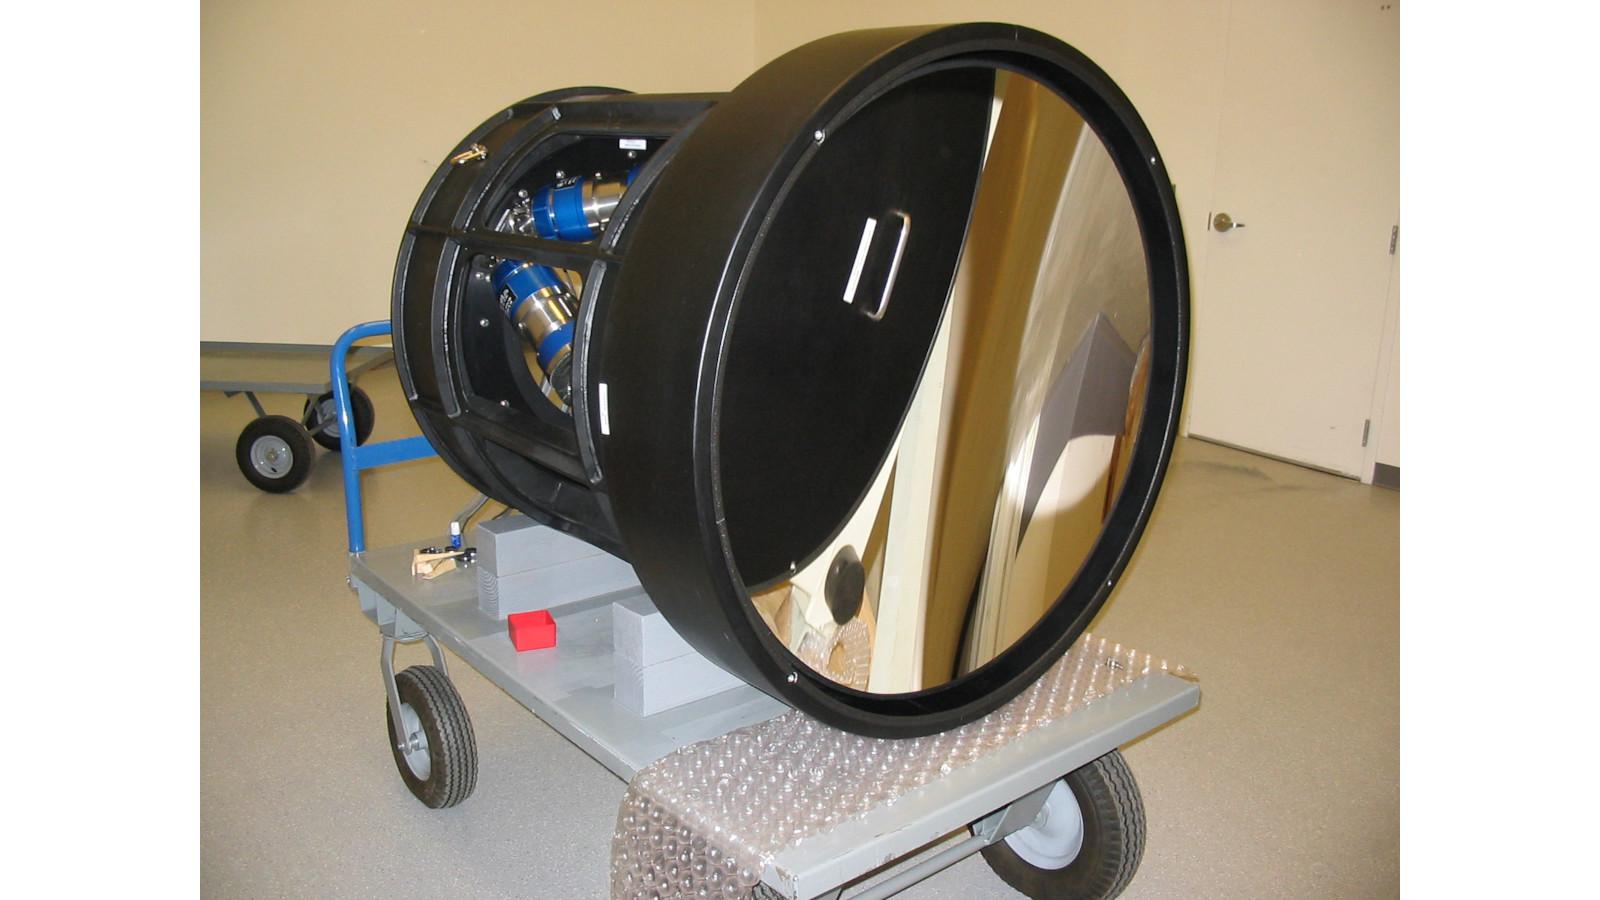 LBT f/15 rigid secondary mirror unit on its handling cart